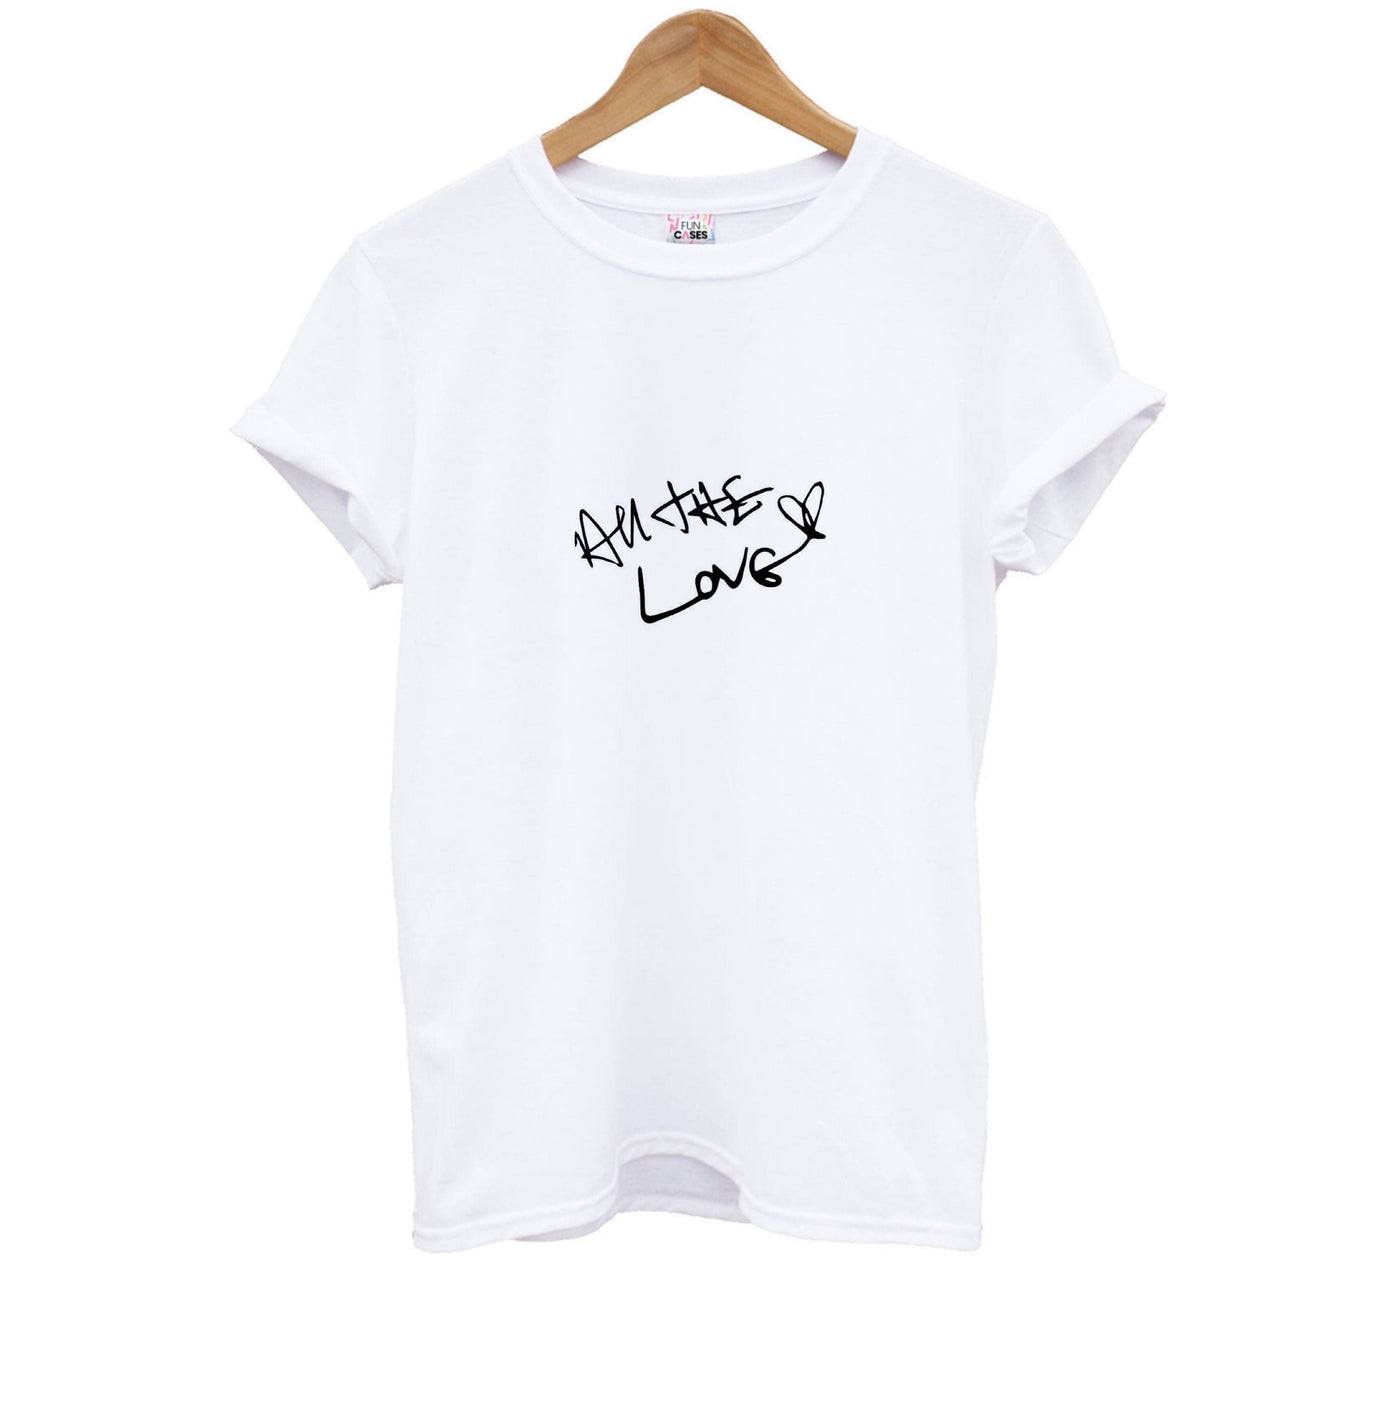 All The Love - Harry Kids T-Shirt